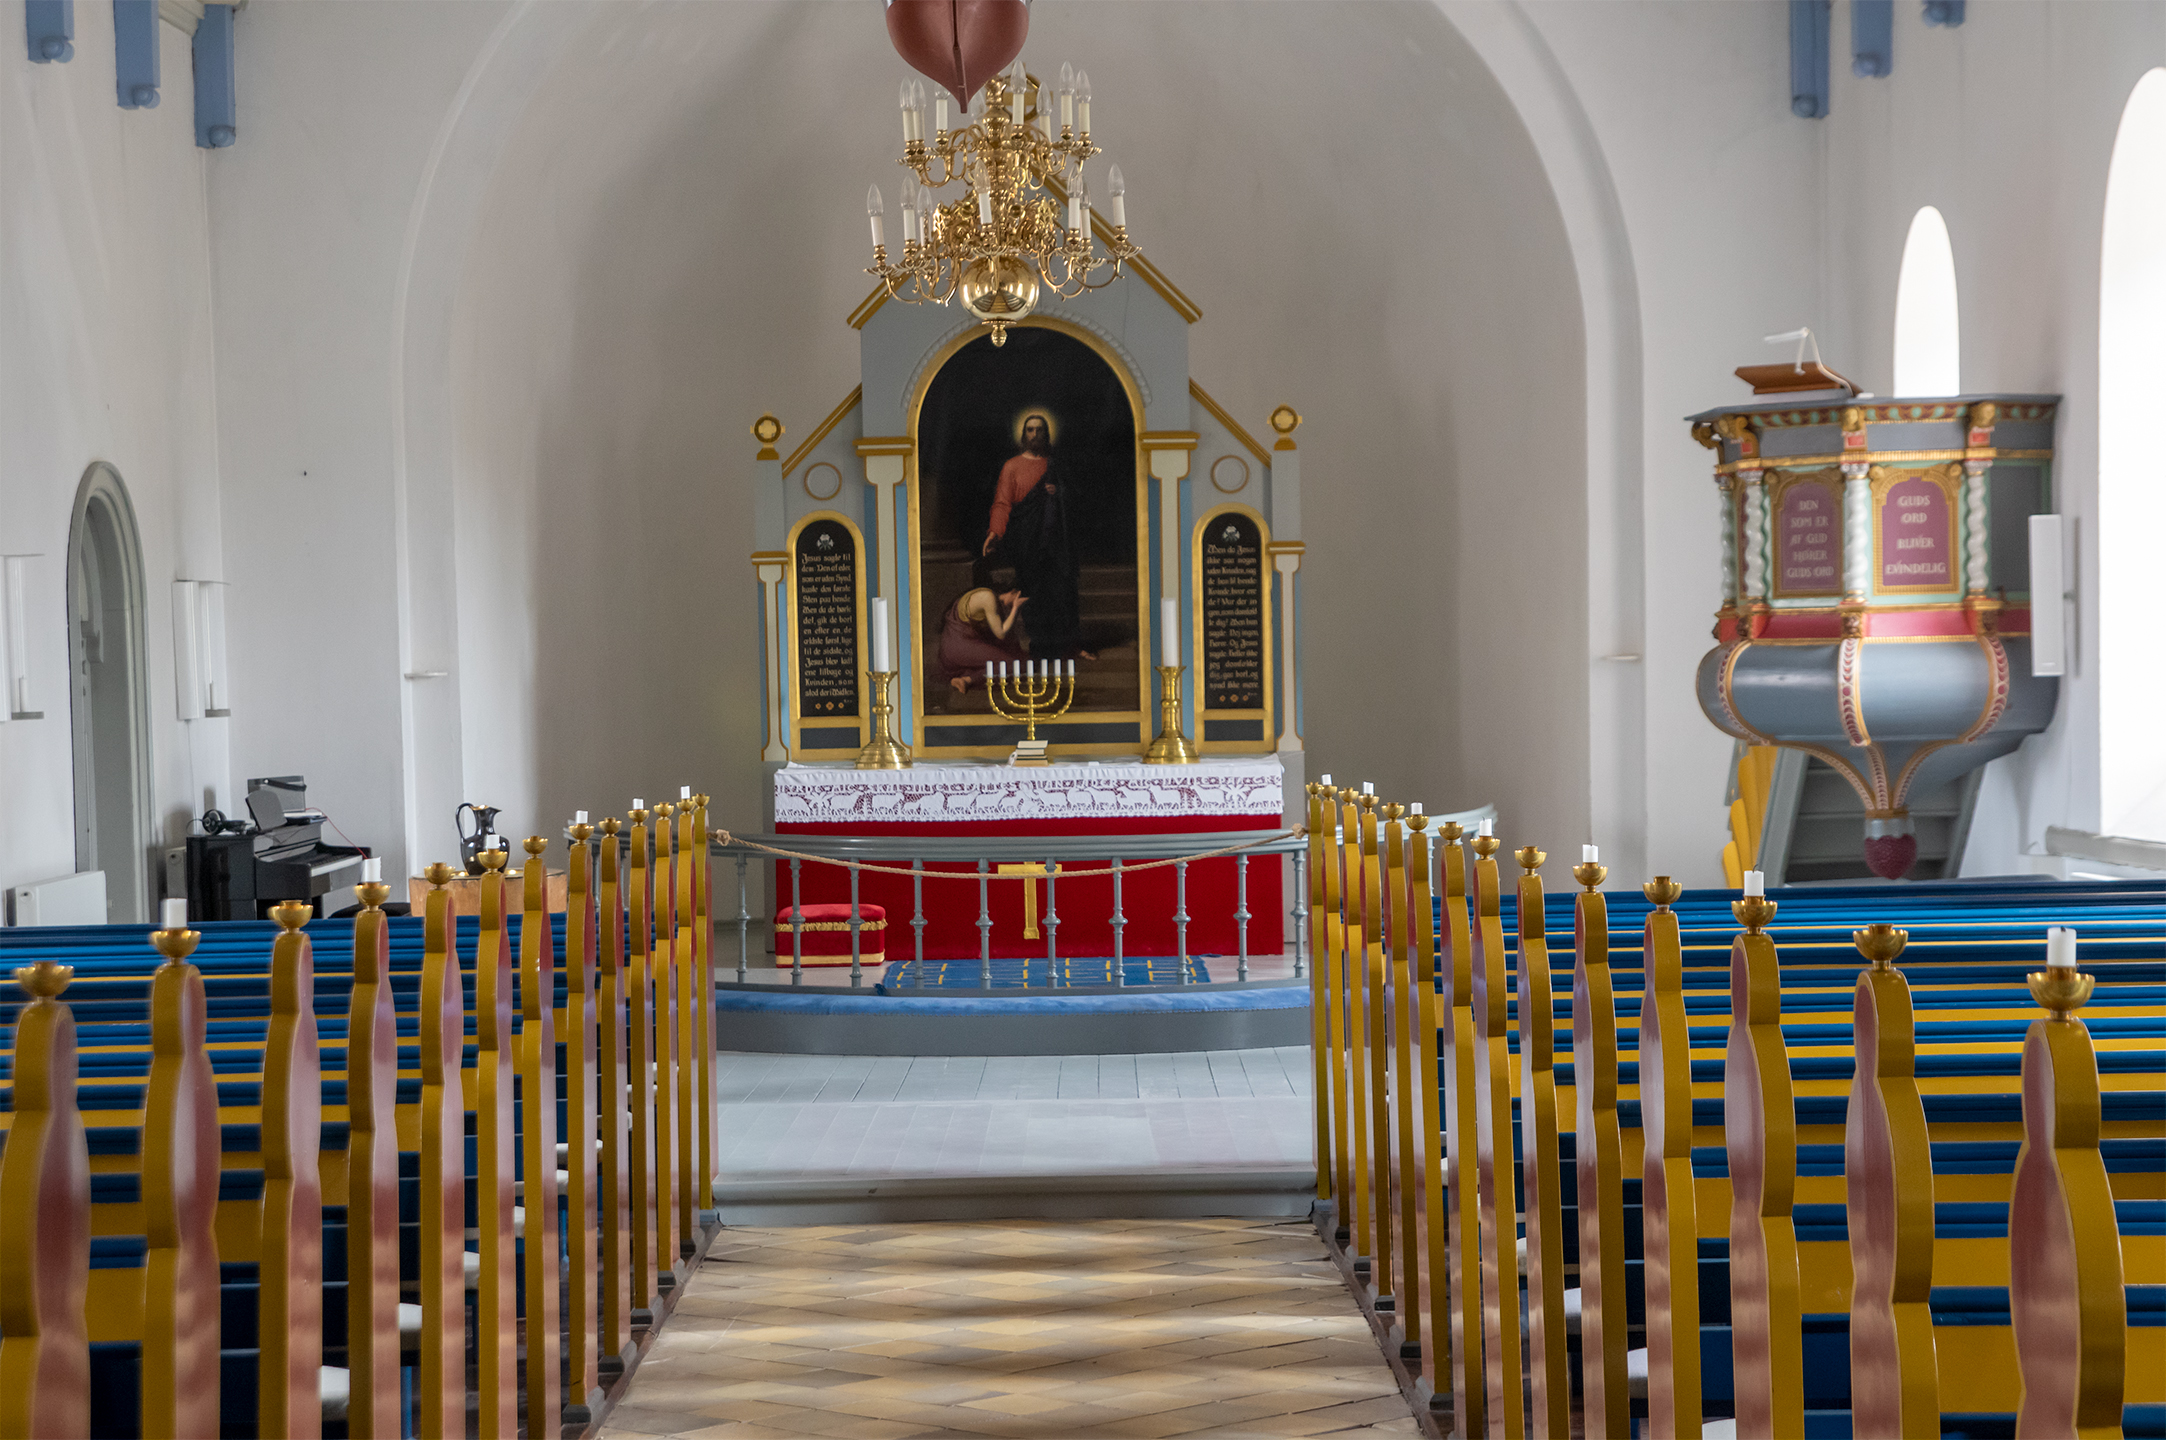 IMGP4906.jpg - Svaneke kirkes altertavle.